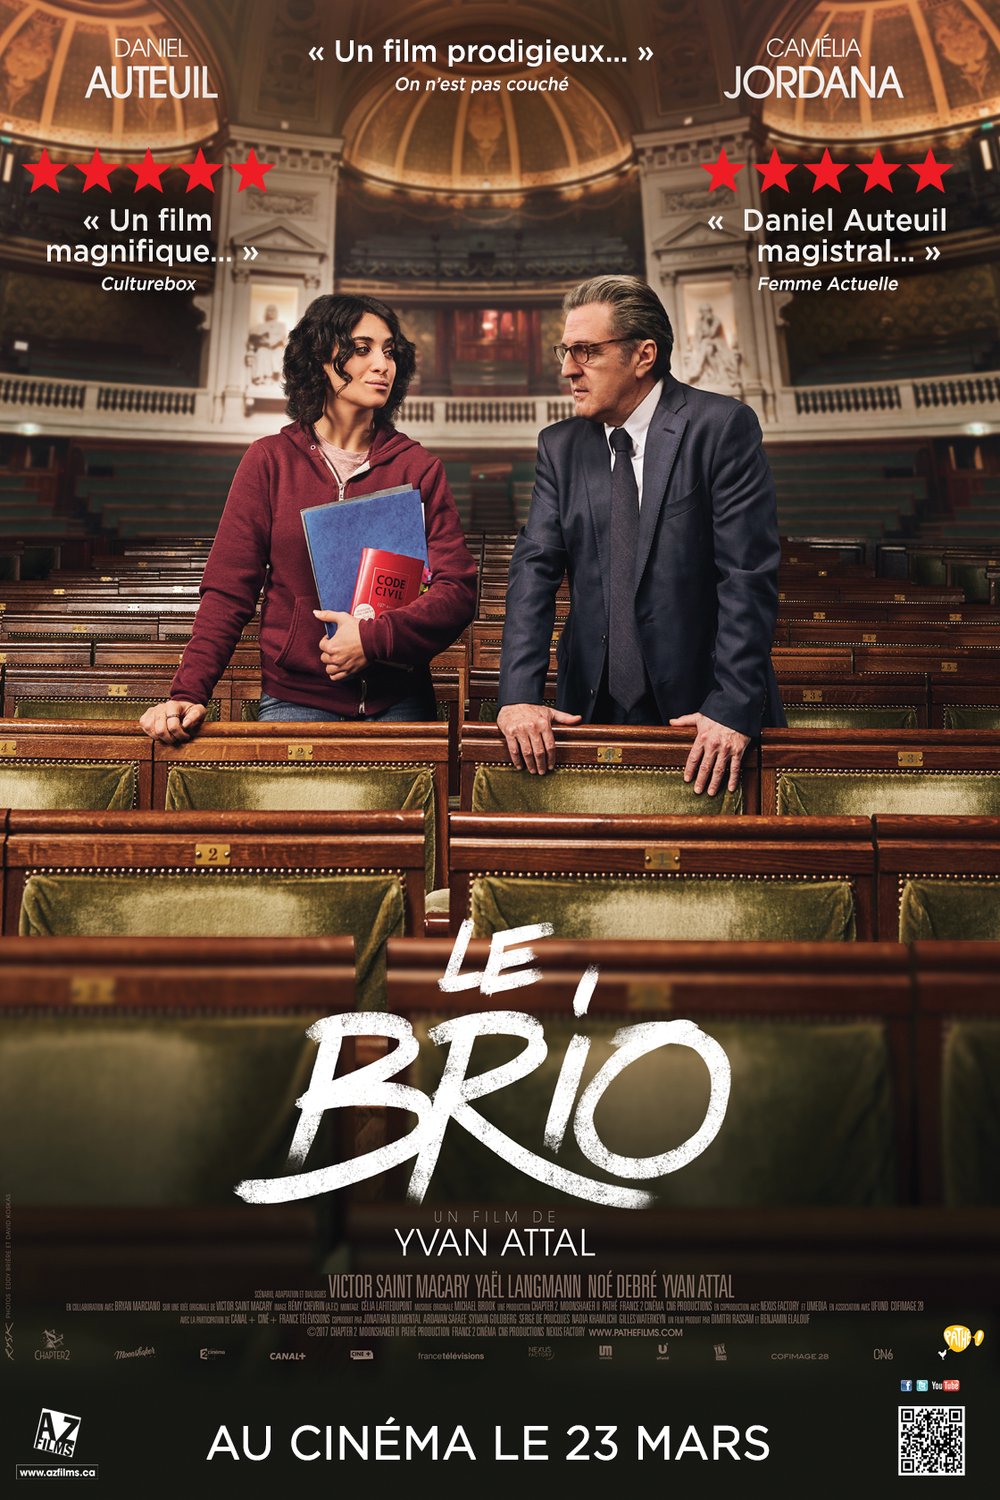 Poster of the movie Le Brio